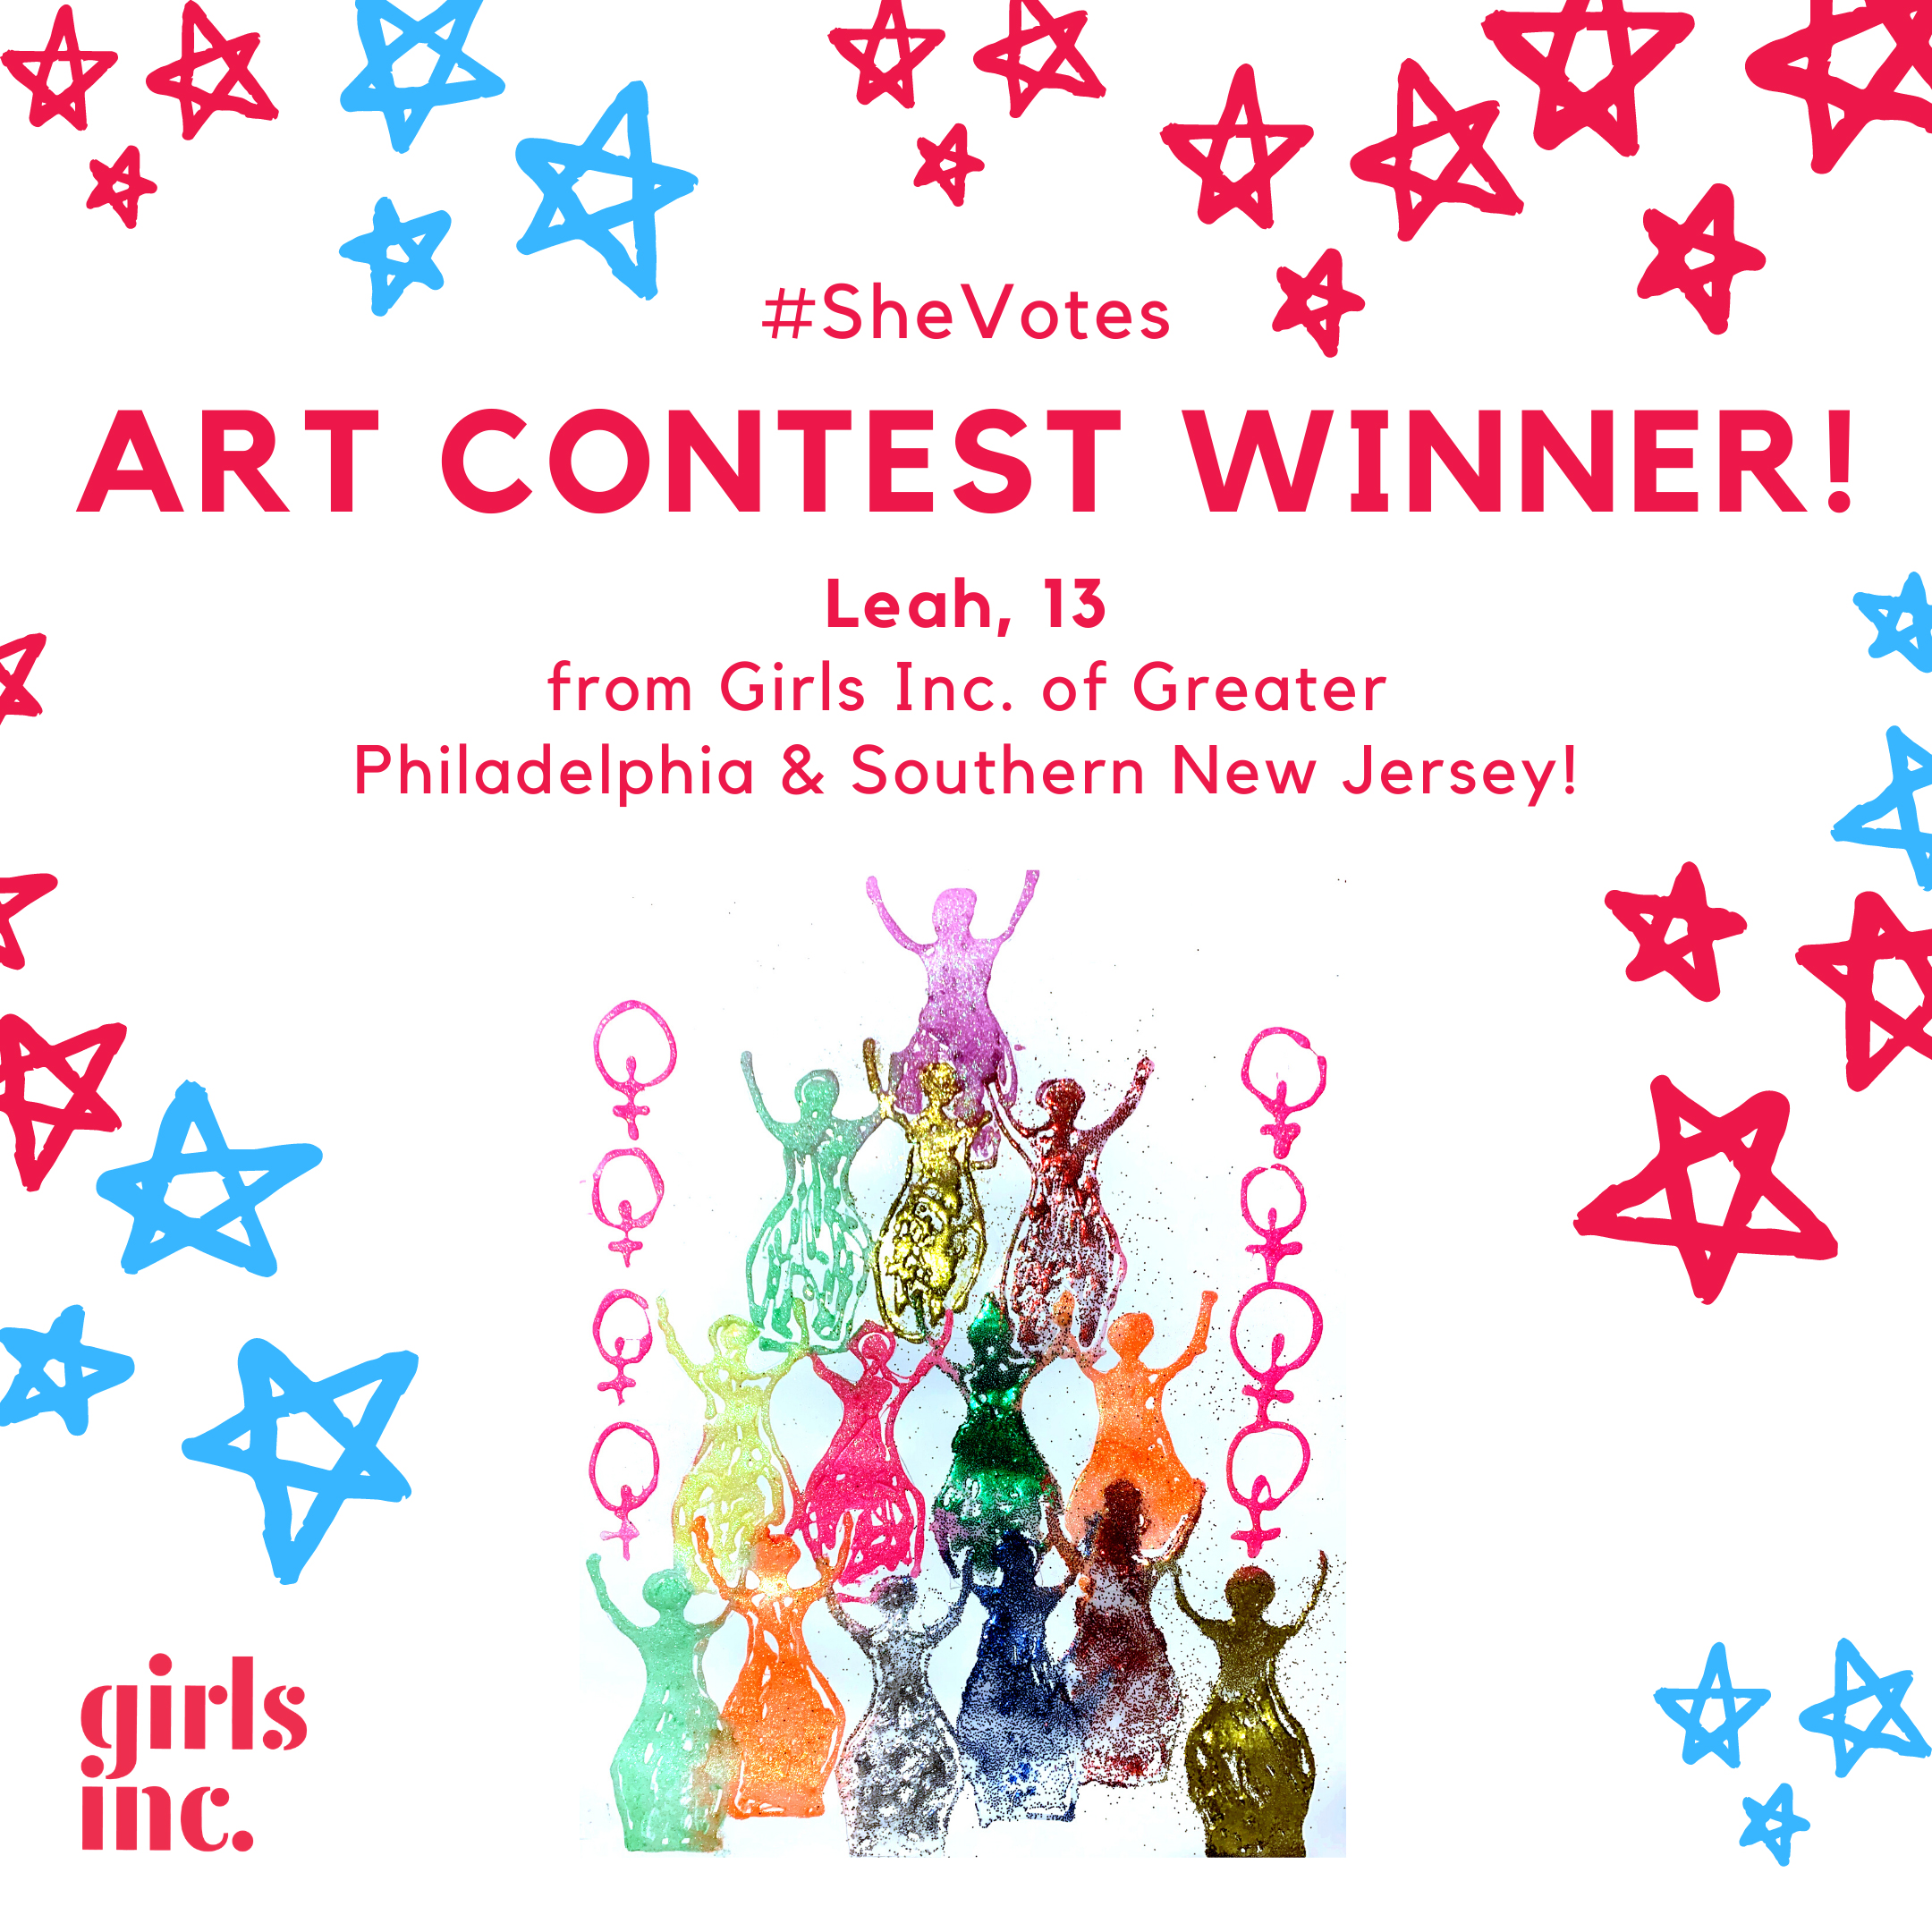 Art contest winner - Leah